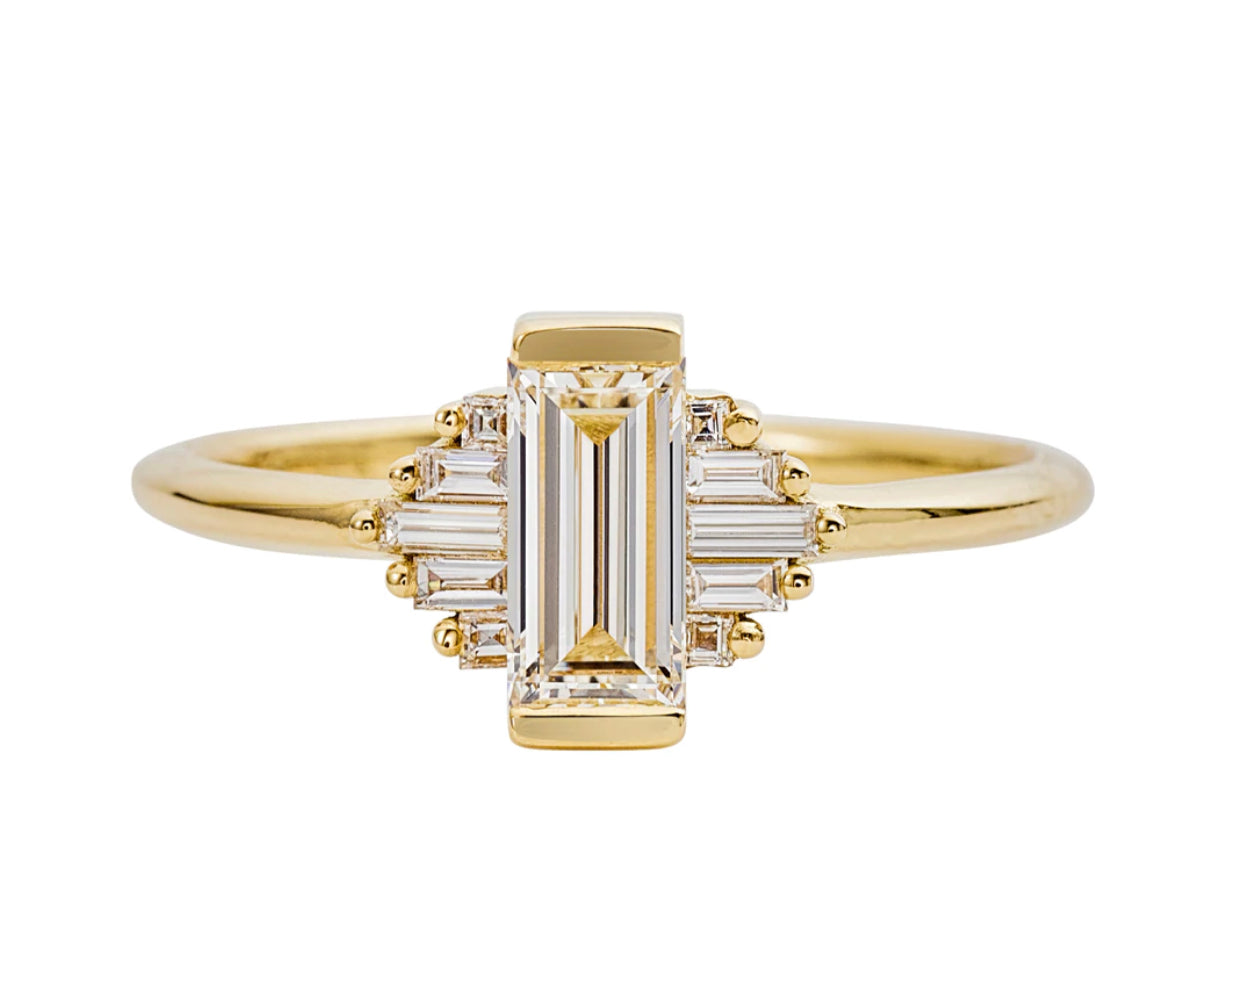 Classic Art Deco Engagement Ring with Baguette Cut Diamonds